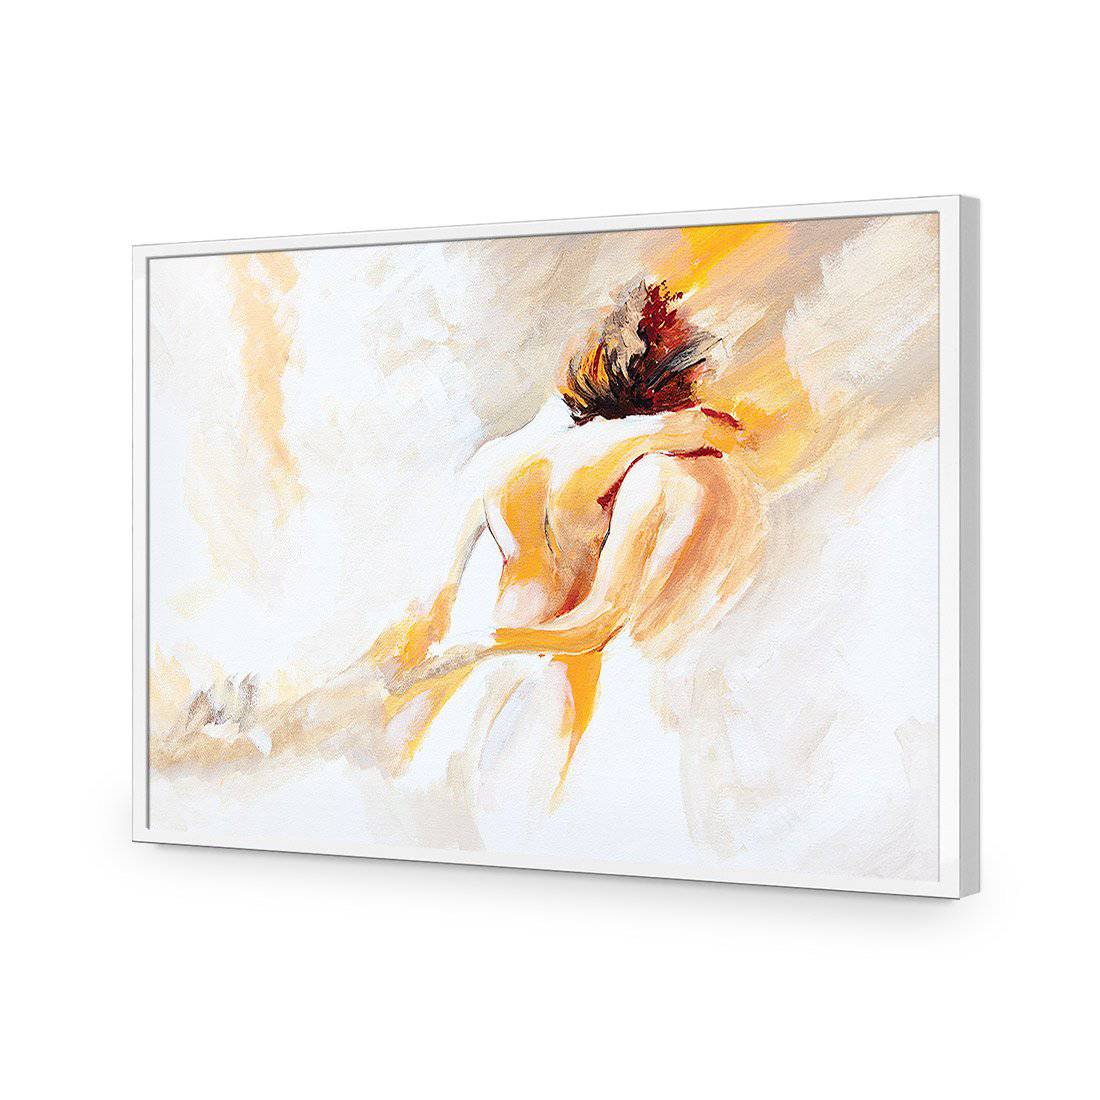 Naked Emotion-Acrylic-Wall Art Design-Without Border-Acrylic - White Frame-45x30cm-Wall Art Designs